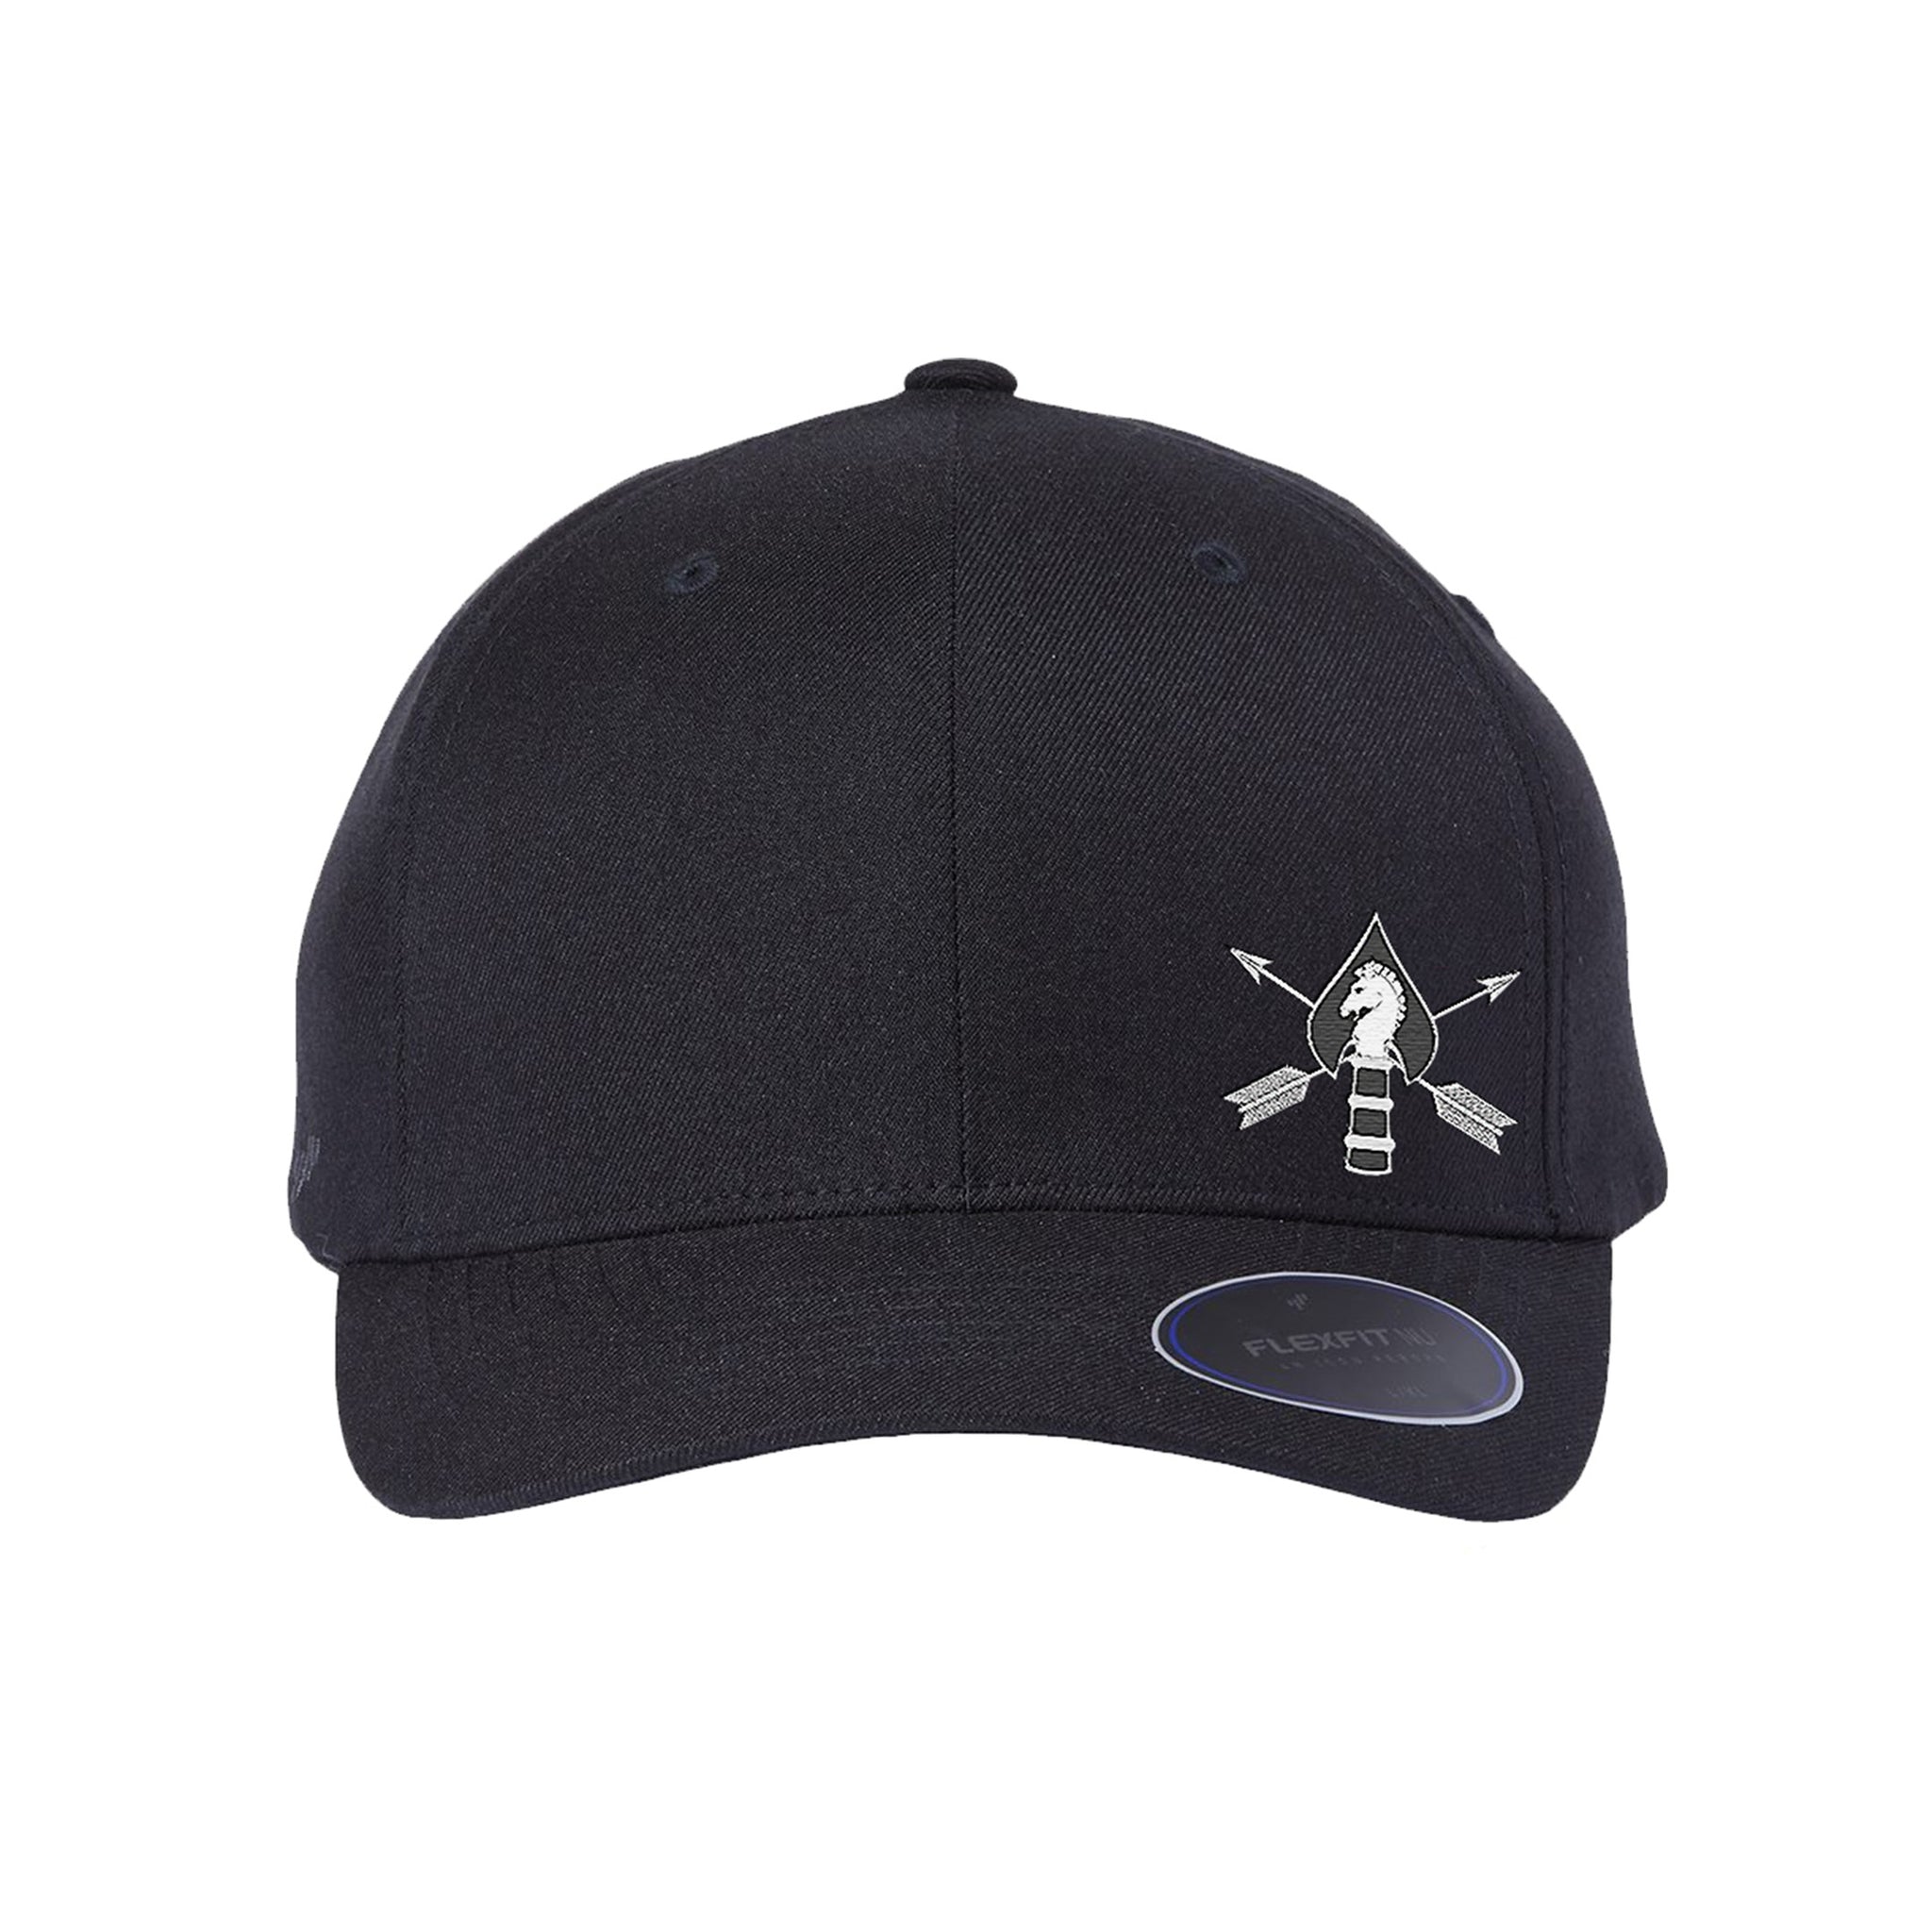 B-6-2 SWTG(A) Flexfit Hat